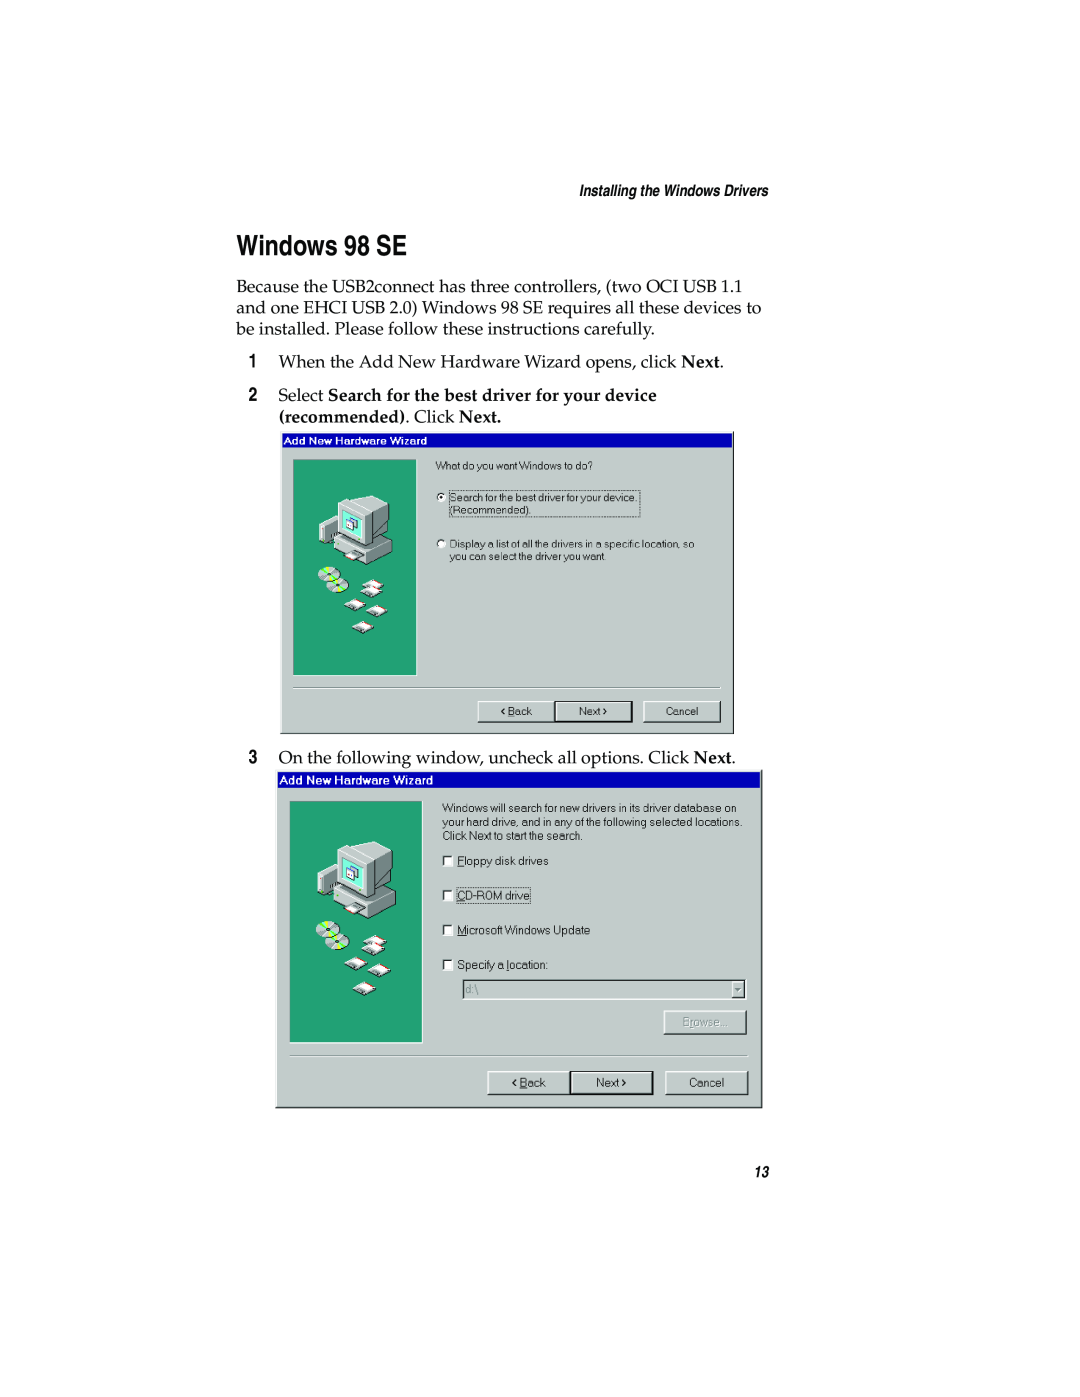 Adaptec USB2connect Host Bus Adapter manual Windows 98 SE 